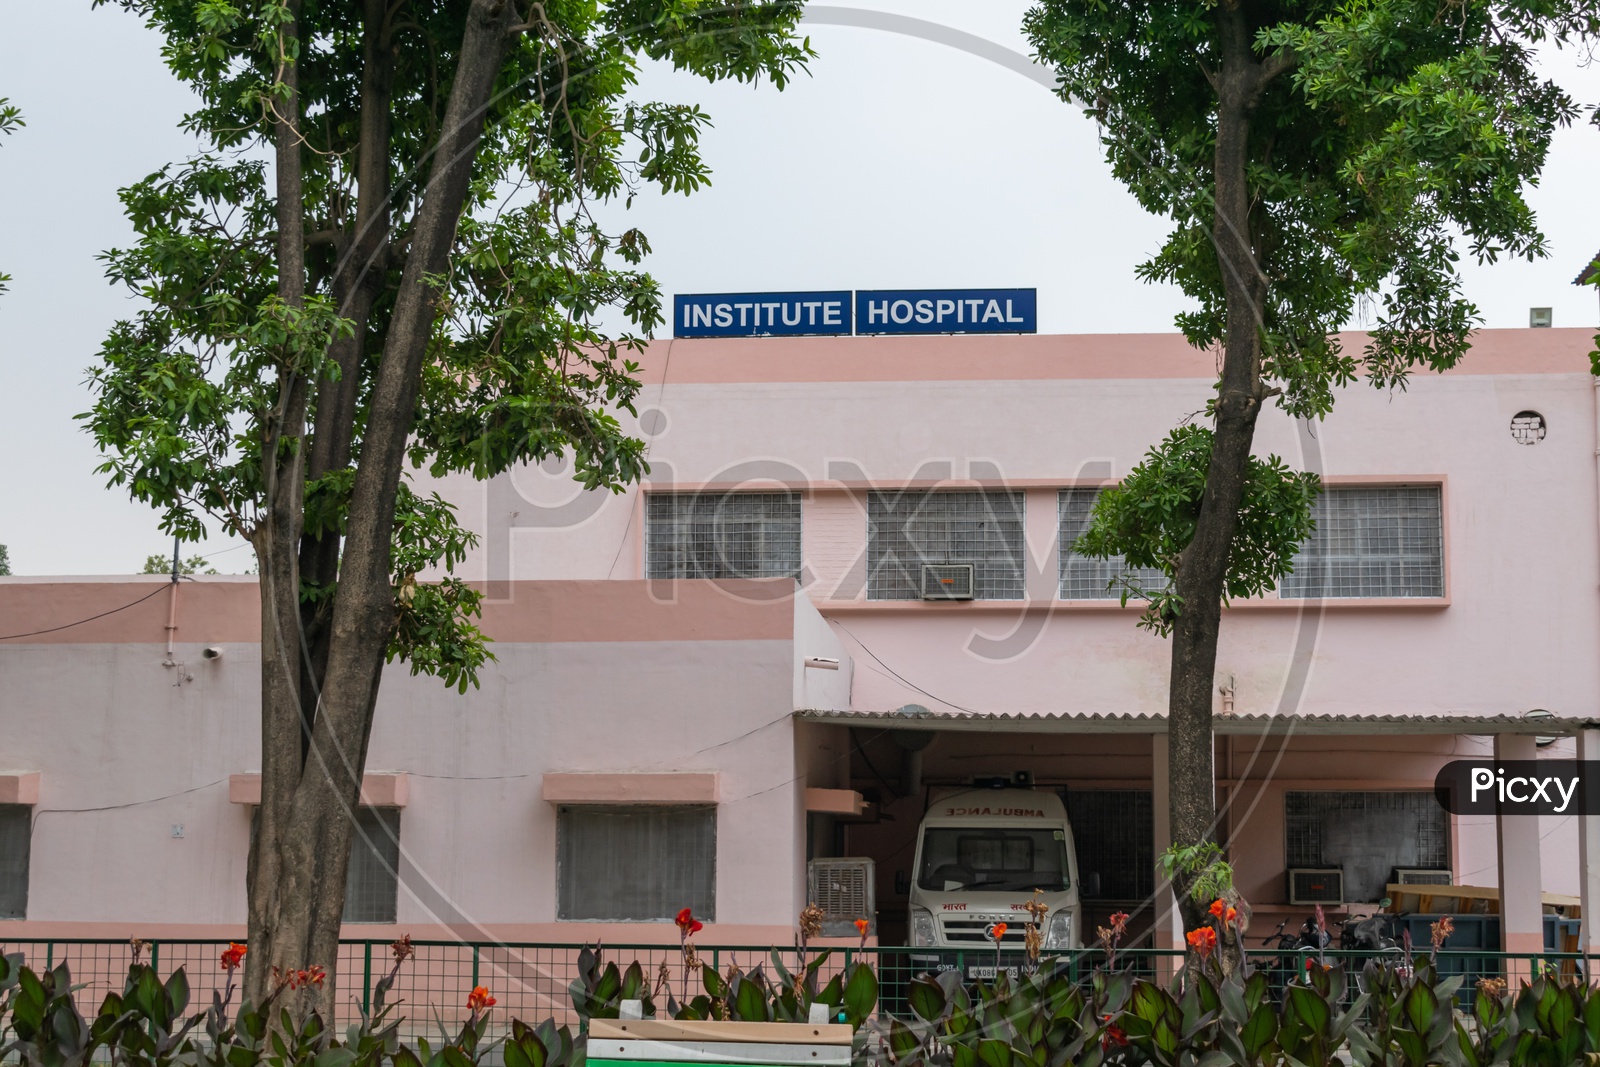 Institute Hospital, Indian Institute of Technology Roorkee (IIT Roorkee)